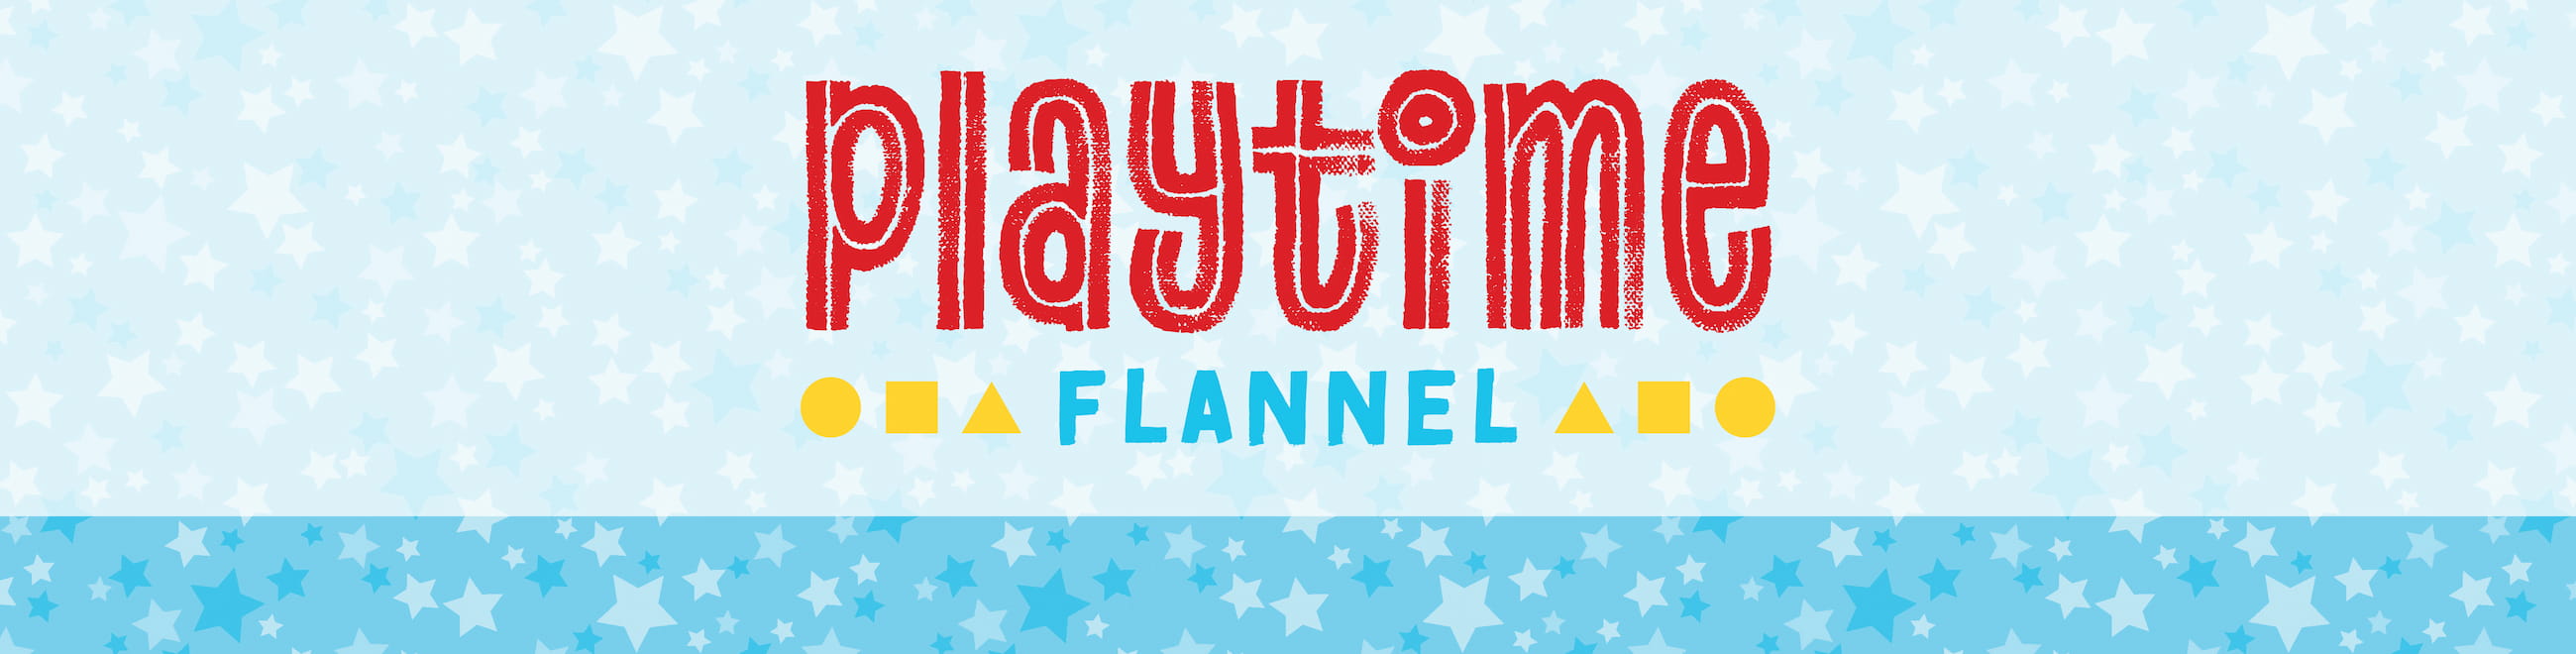 Playtime Flannel Basics from Maywood Studio